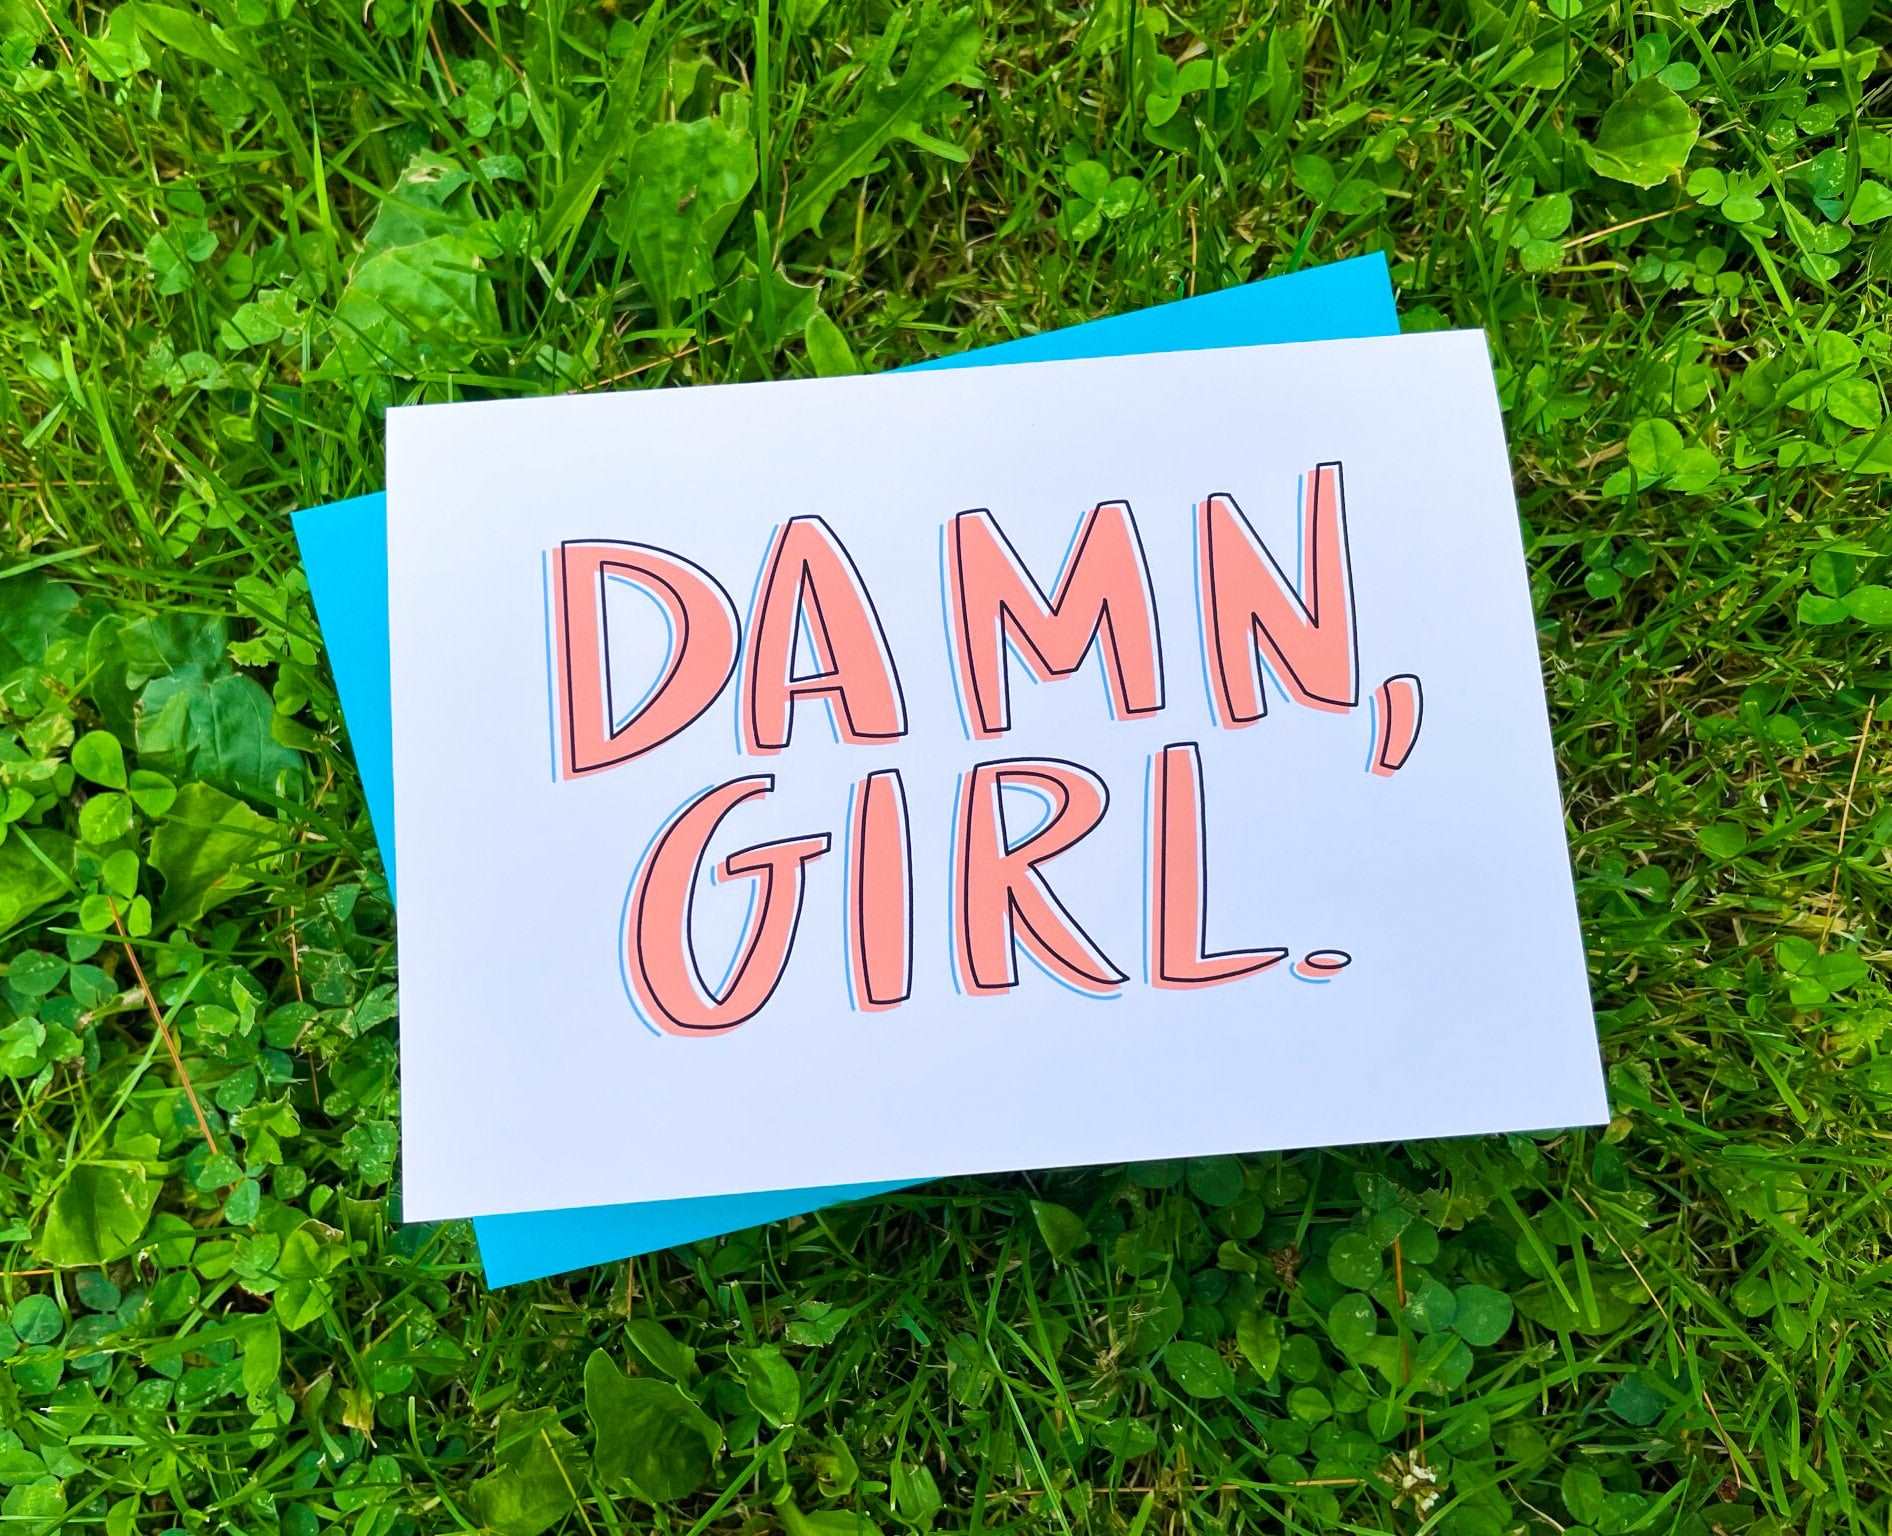 Damn, Girl Card by StoneDonut Design